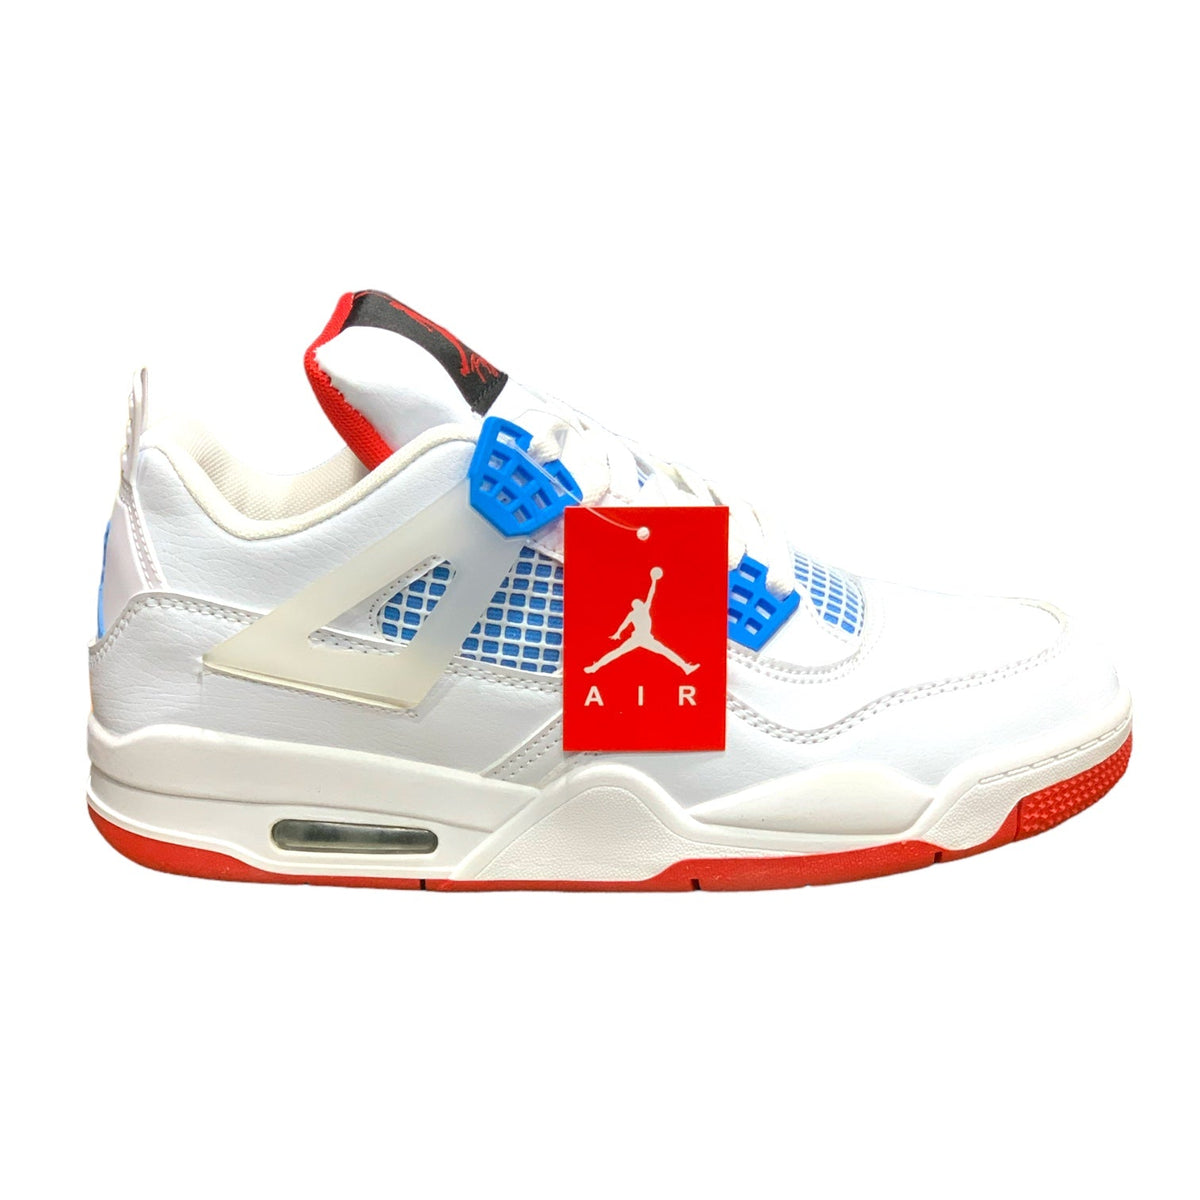 Nike Air jordan 4 White Blue Red